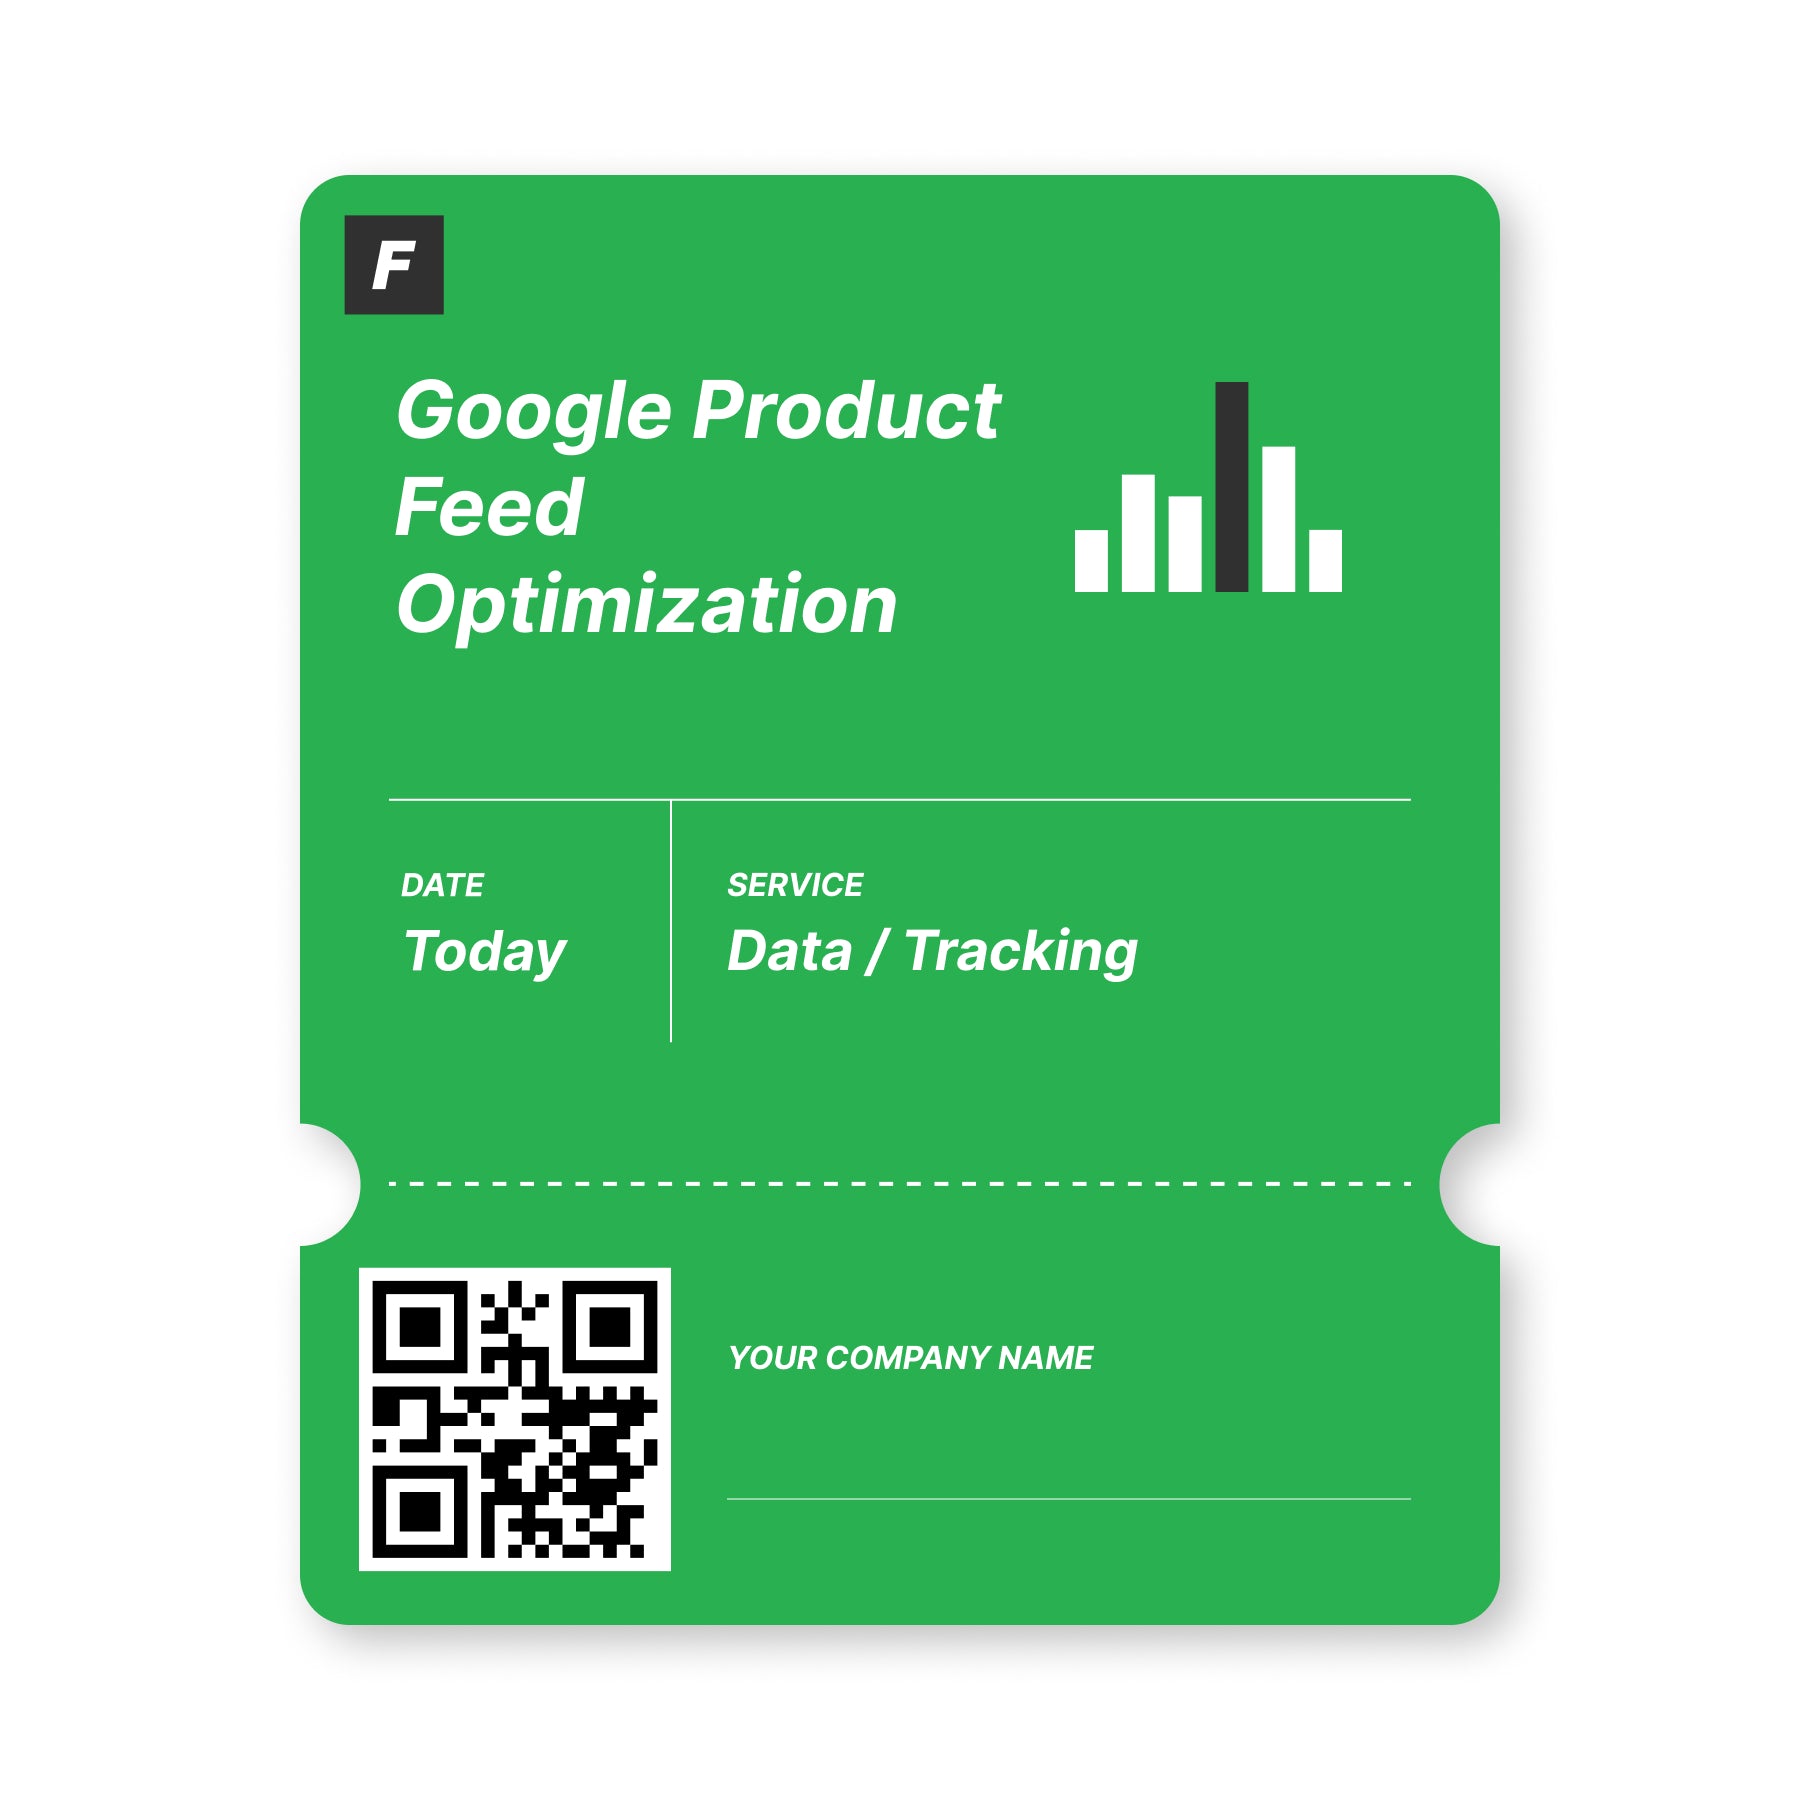 Google Product Feed Optimization